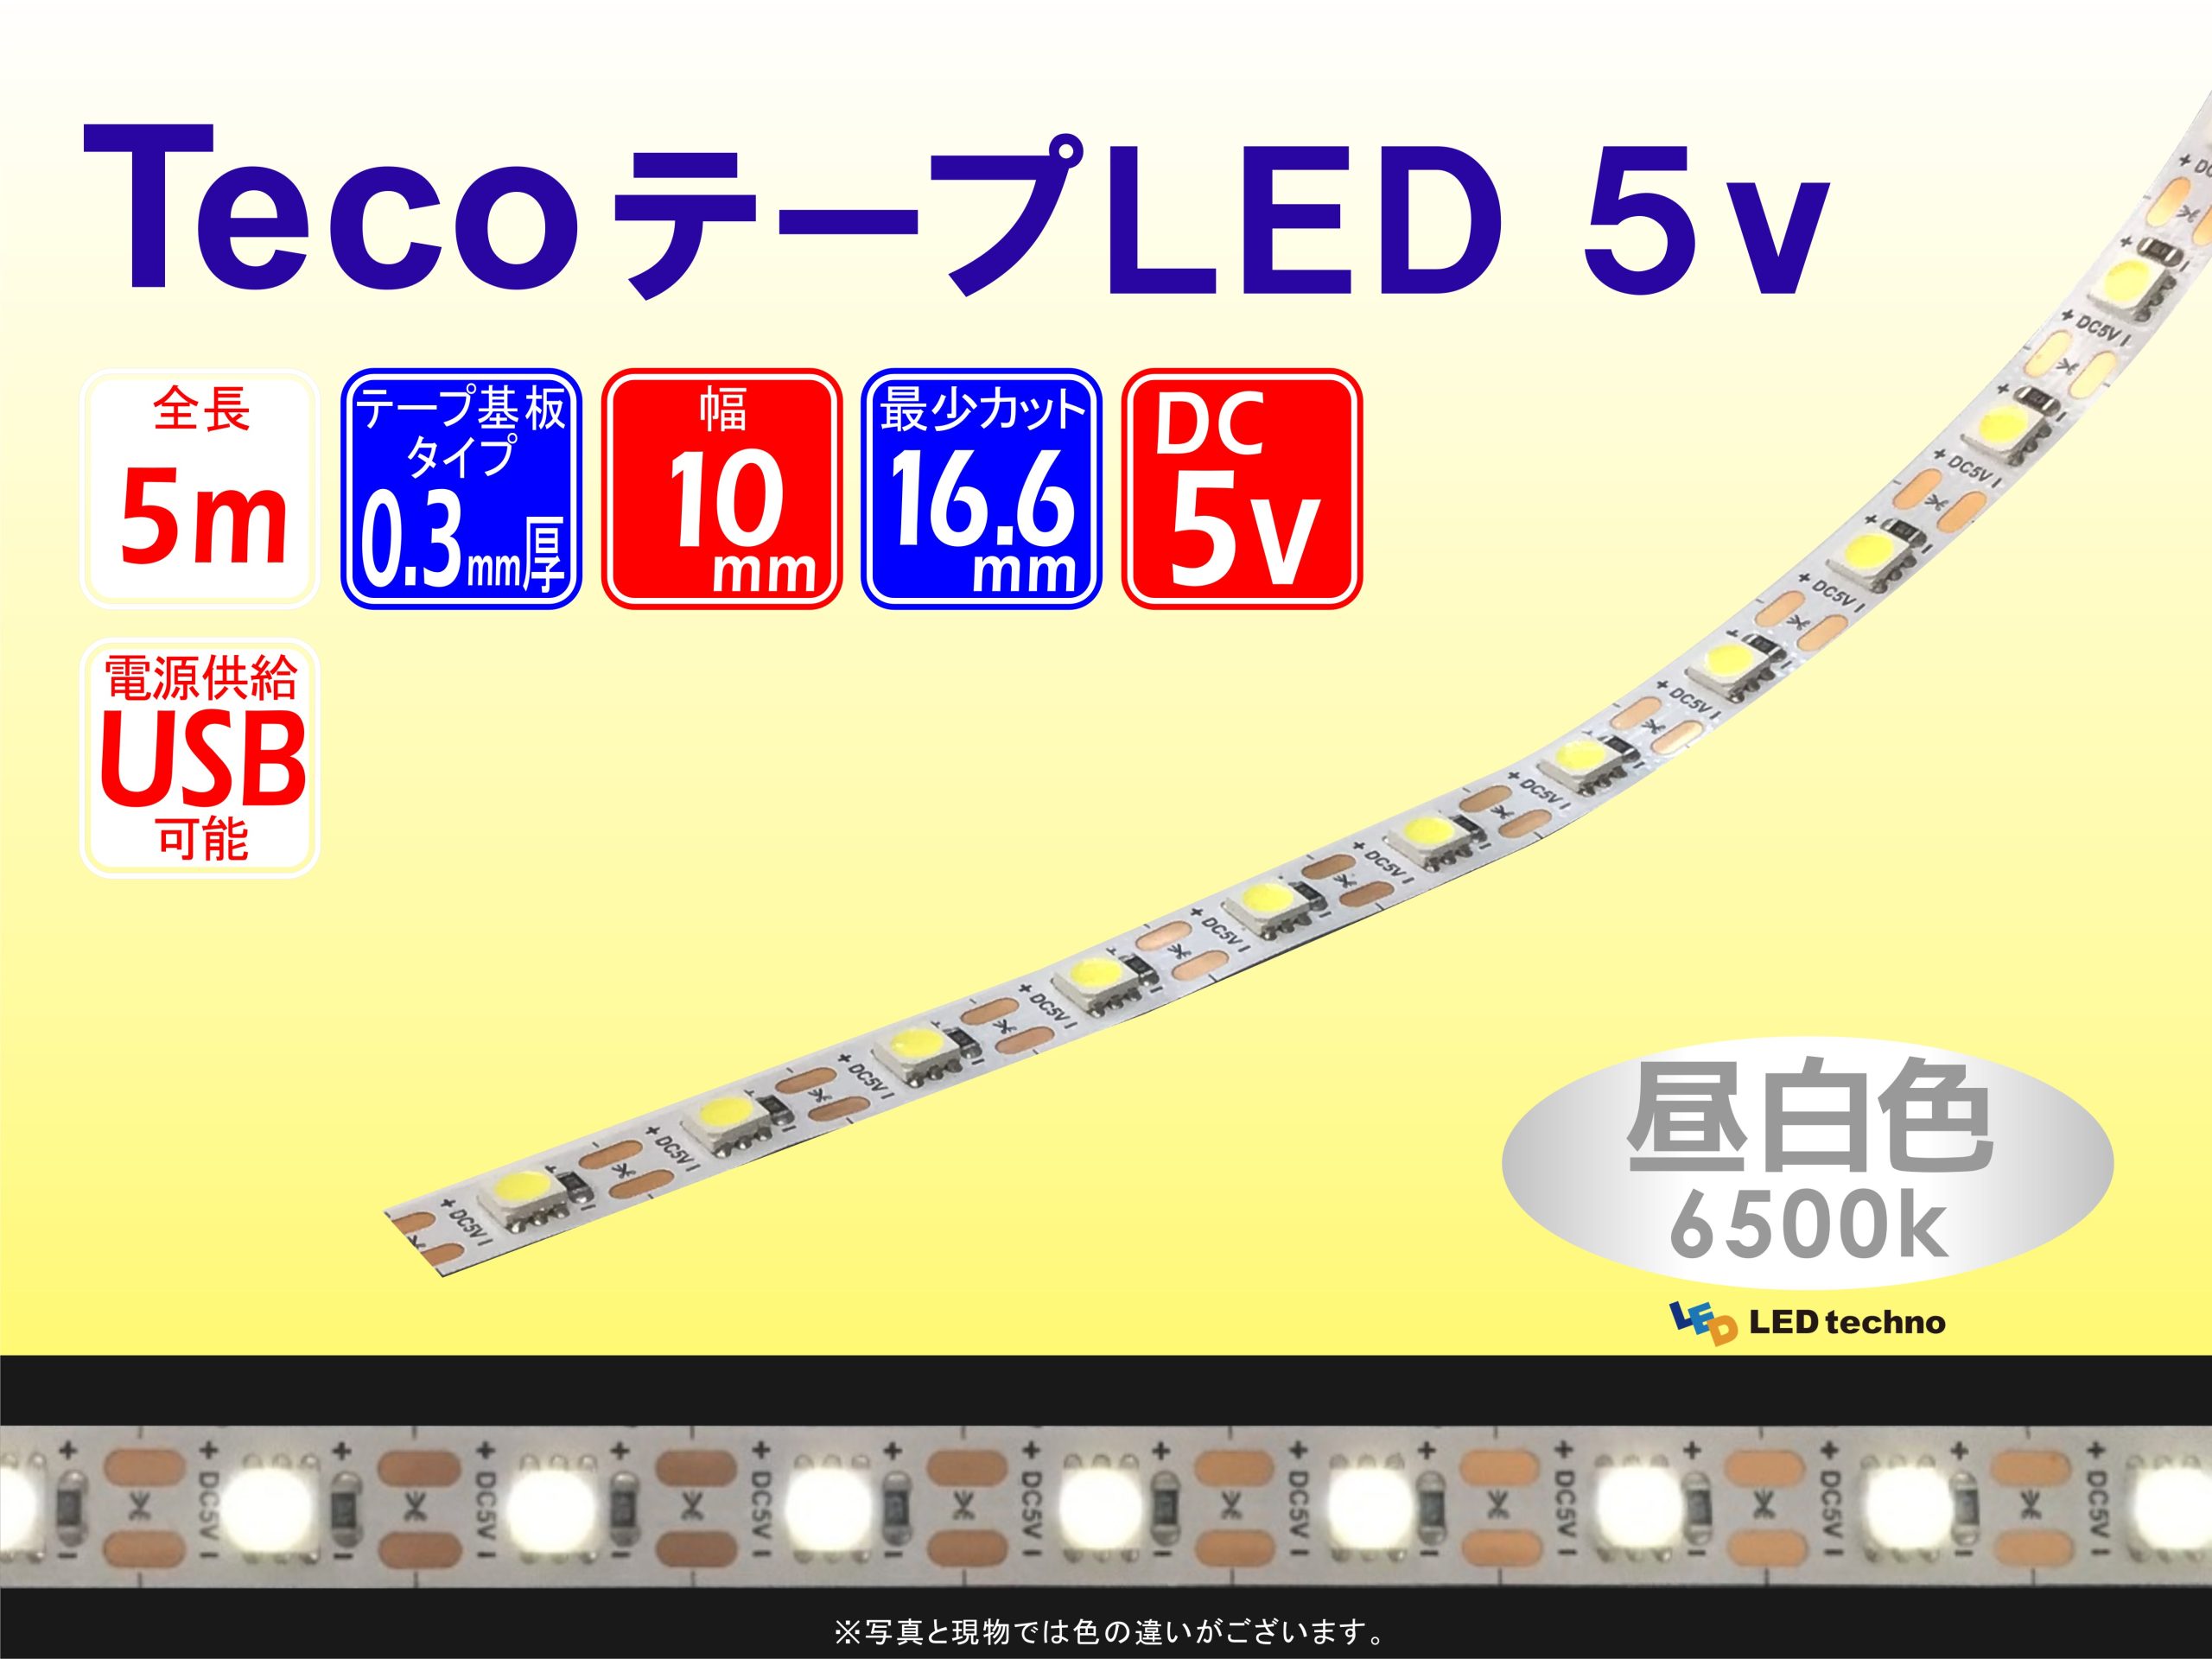 No,3 | Tecoテープ5V 昼白色 6500K |